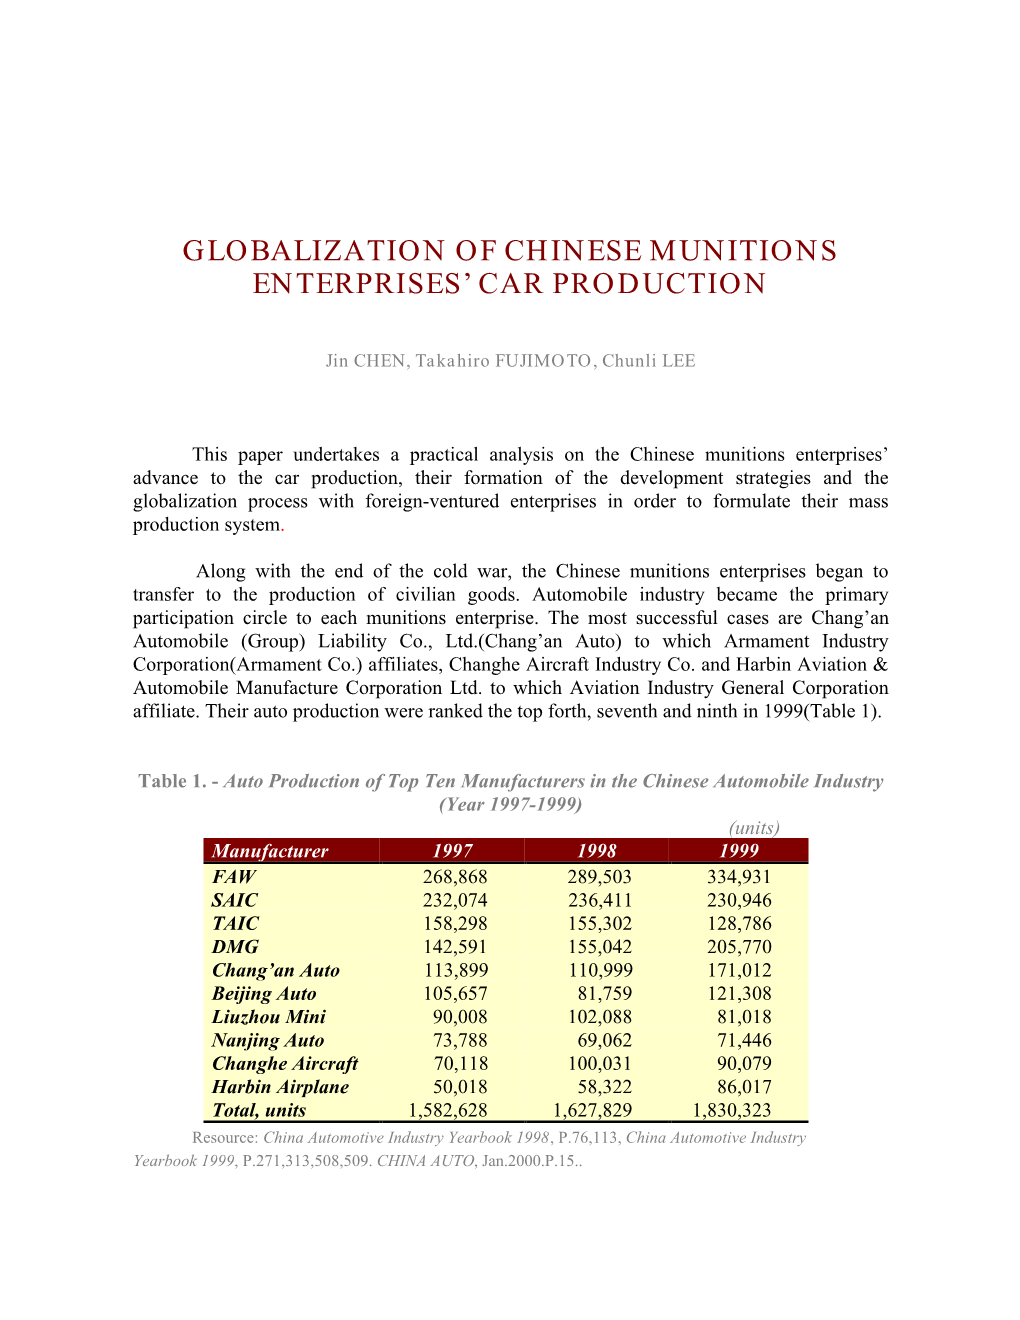 Globalization of Chinese Munitions Enterprises' Car